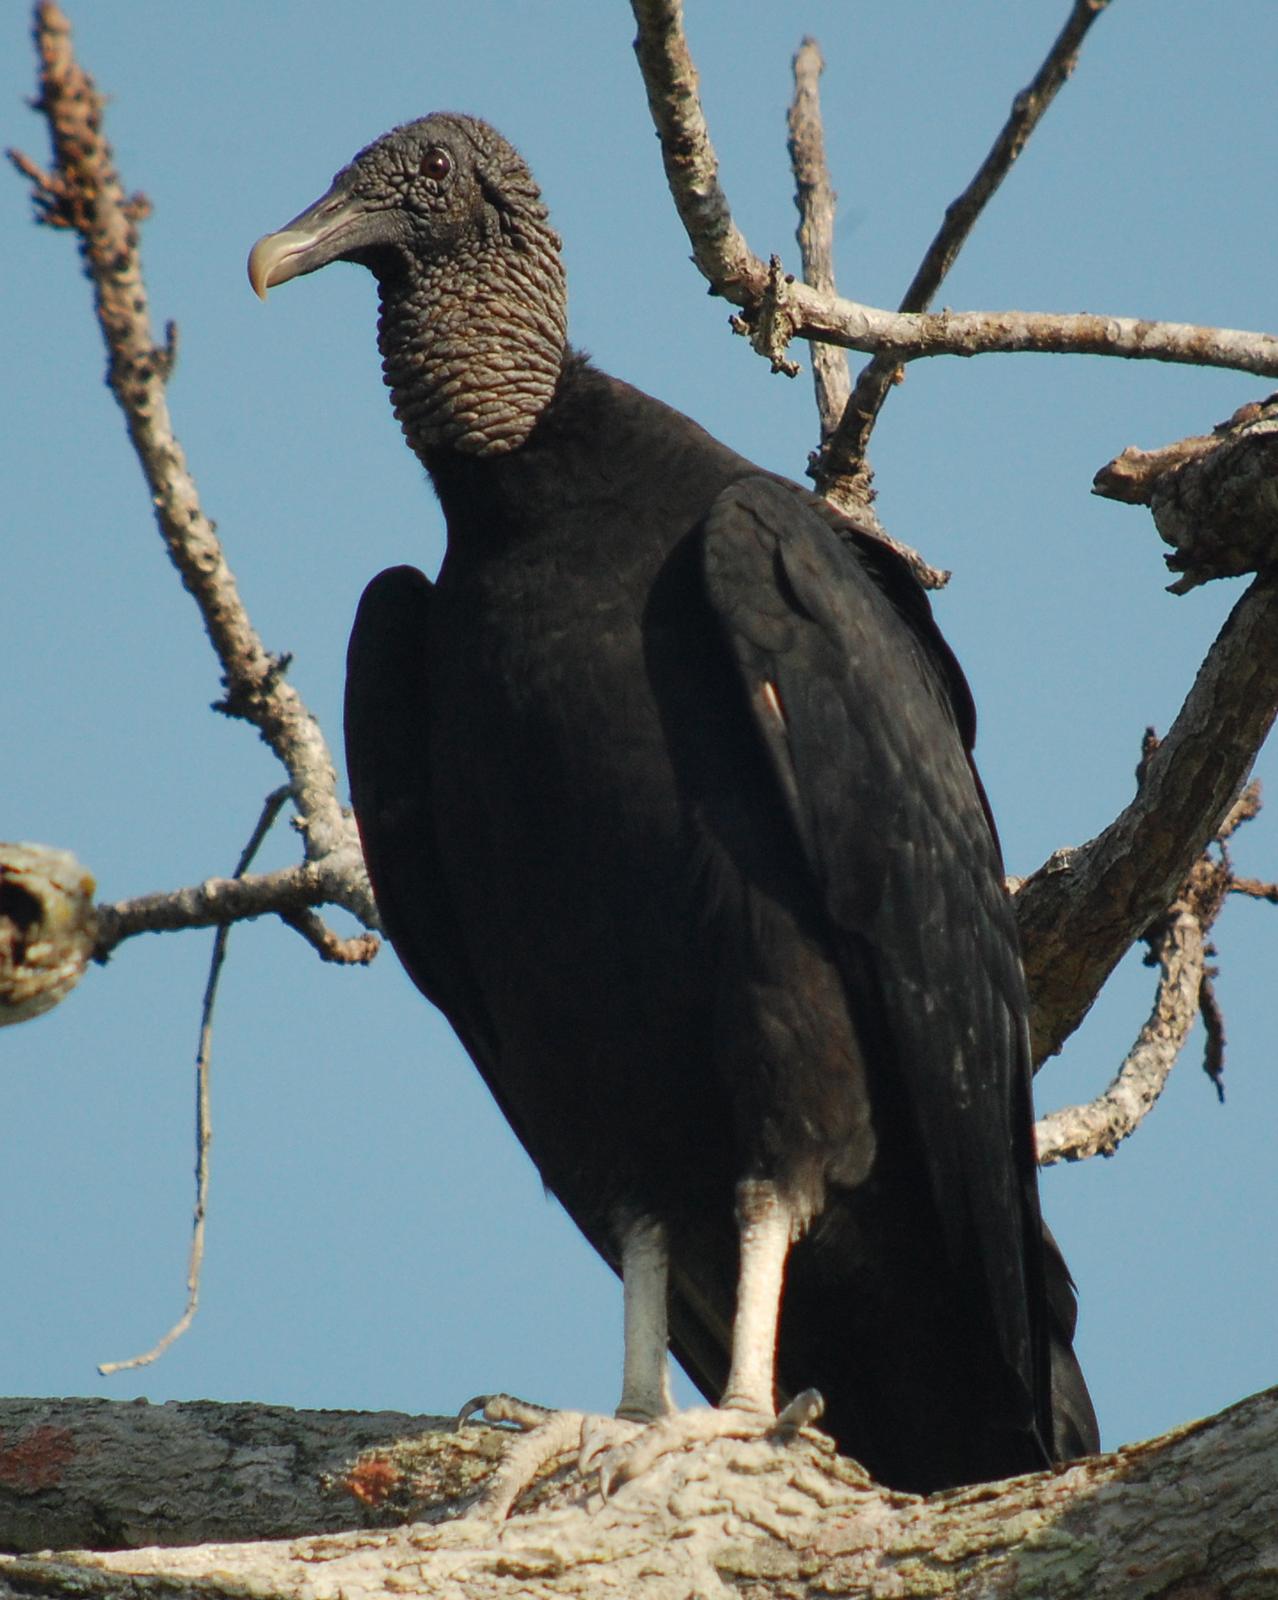 Black Vulture Photo by Birdchick.com